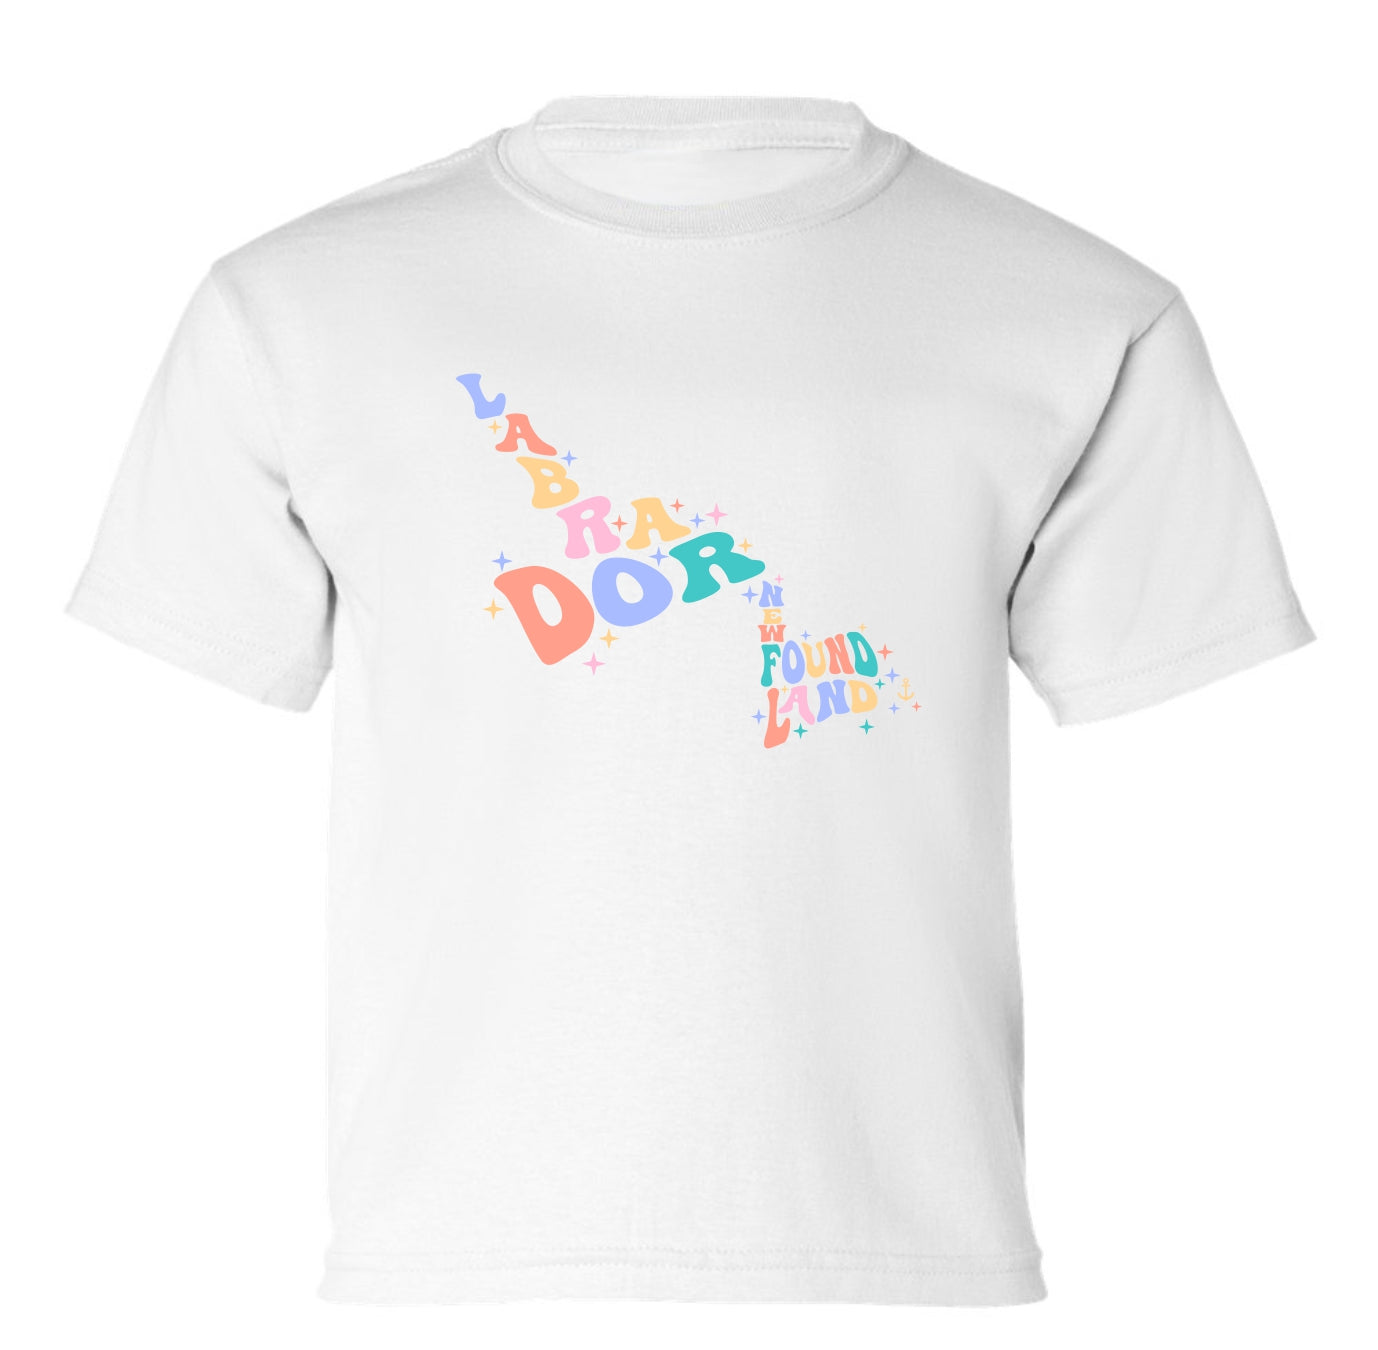 "Newfoundland and Labrador" Toddler/Youth T-Shirt